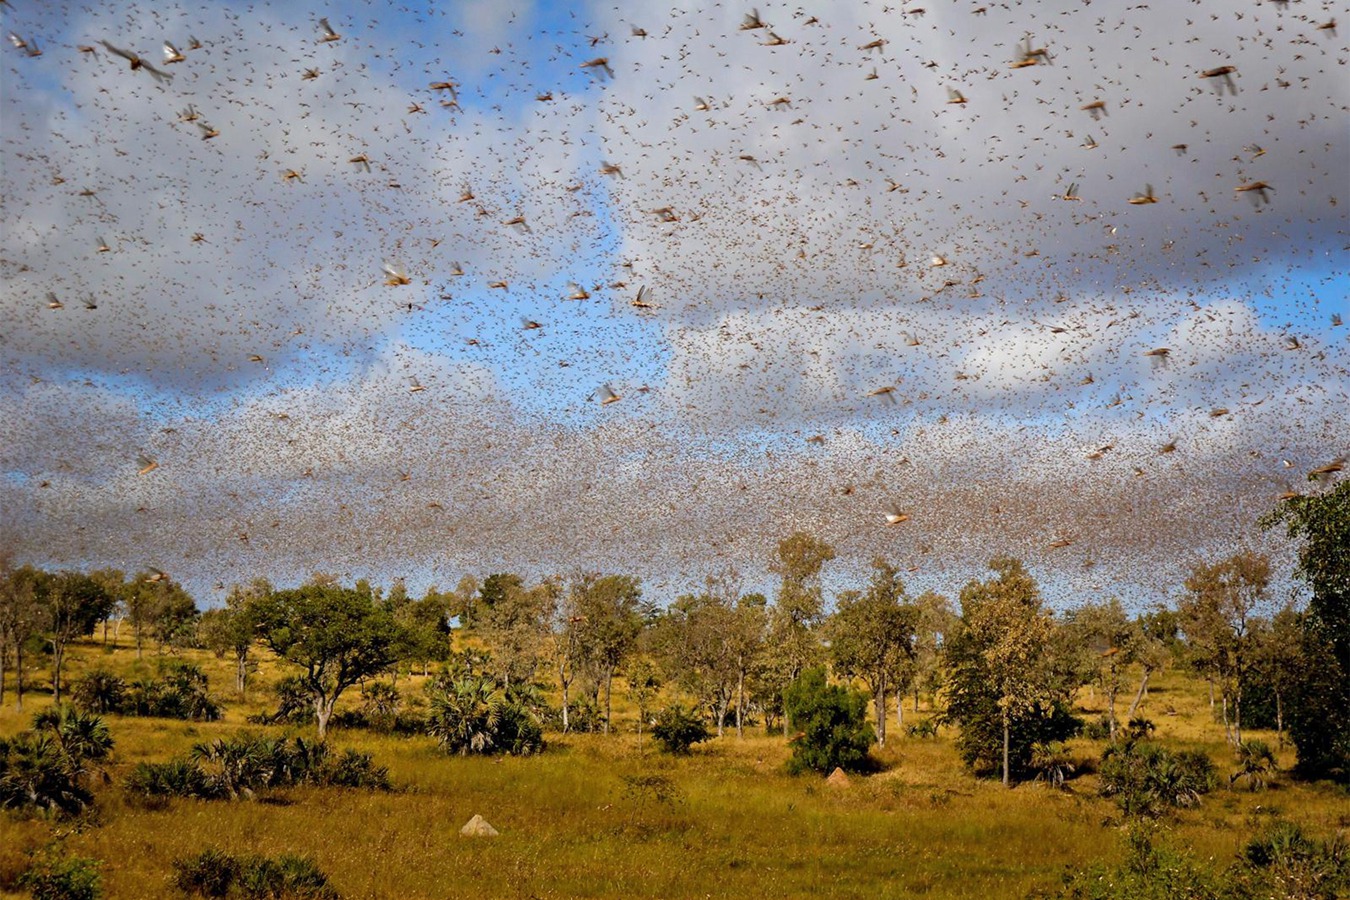 11-locusts-in-south-africa_.jpg